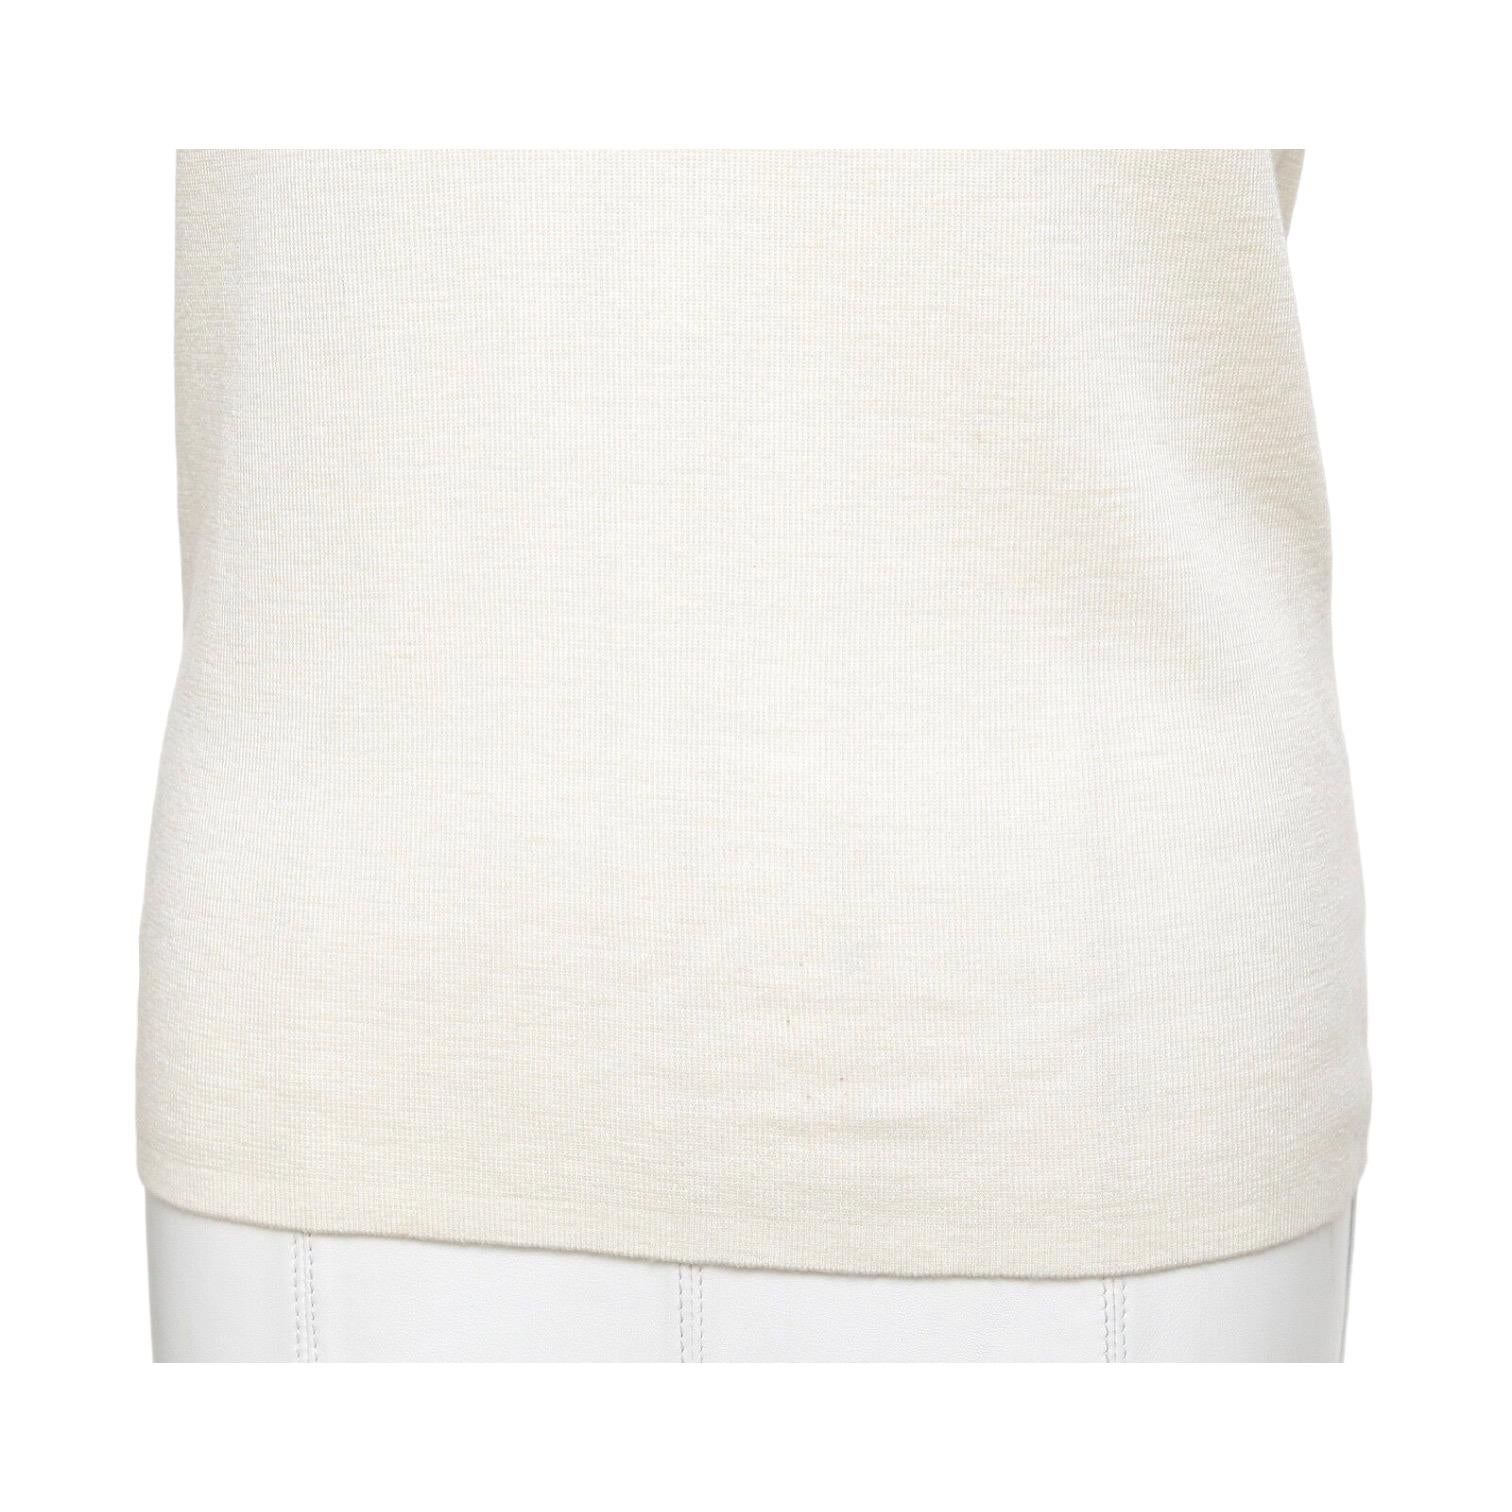 AKRIS PUNTO Sleeveless Top Sweater Knit Shirt Shell Wool Cream Sz 8 40 BNWT For Sale 1